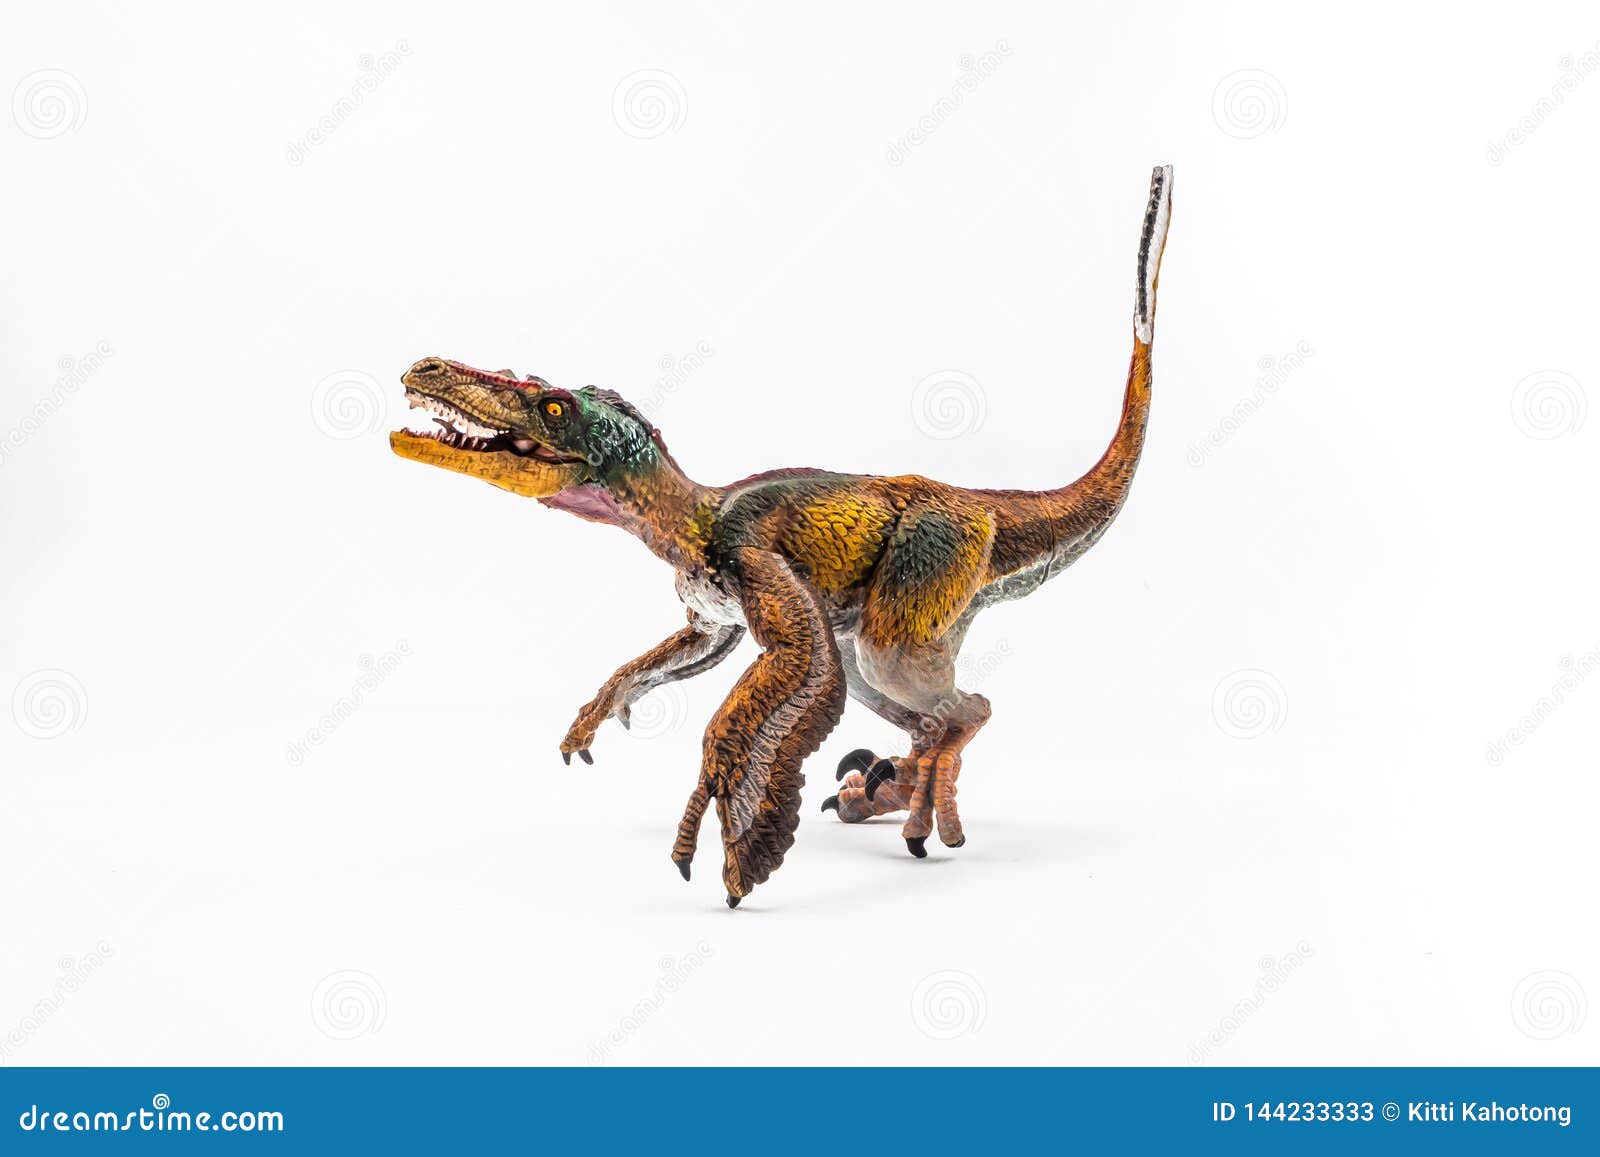 feathered velociraptor  , dinosaur on white background